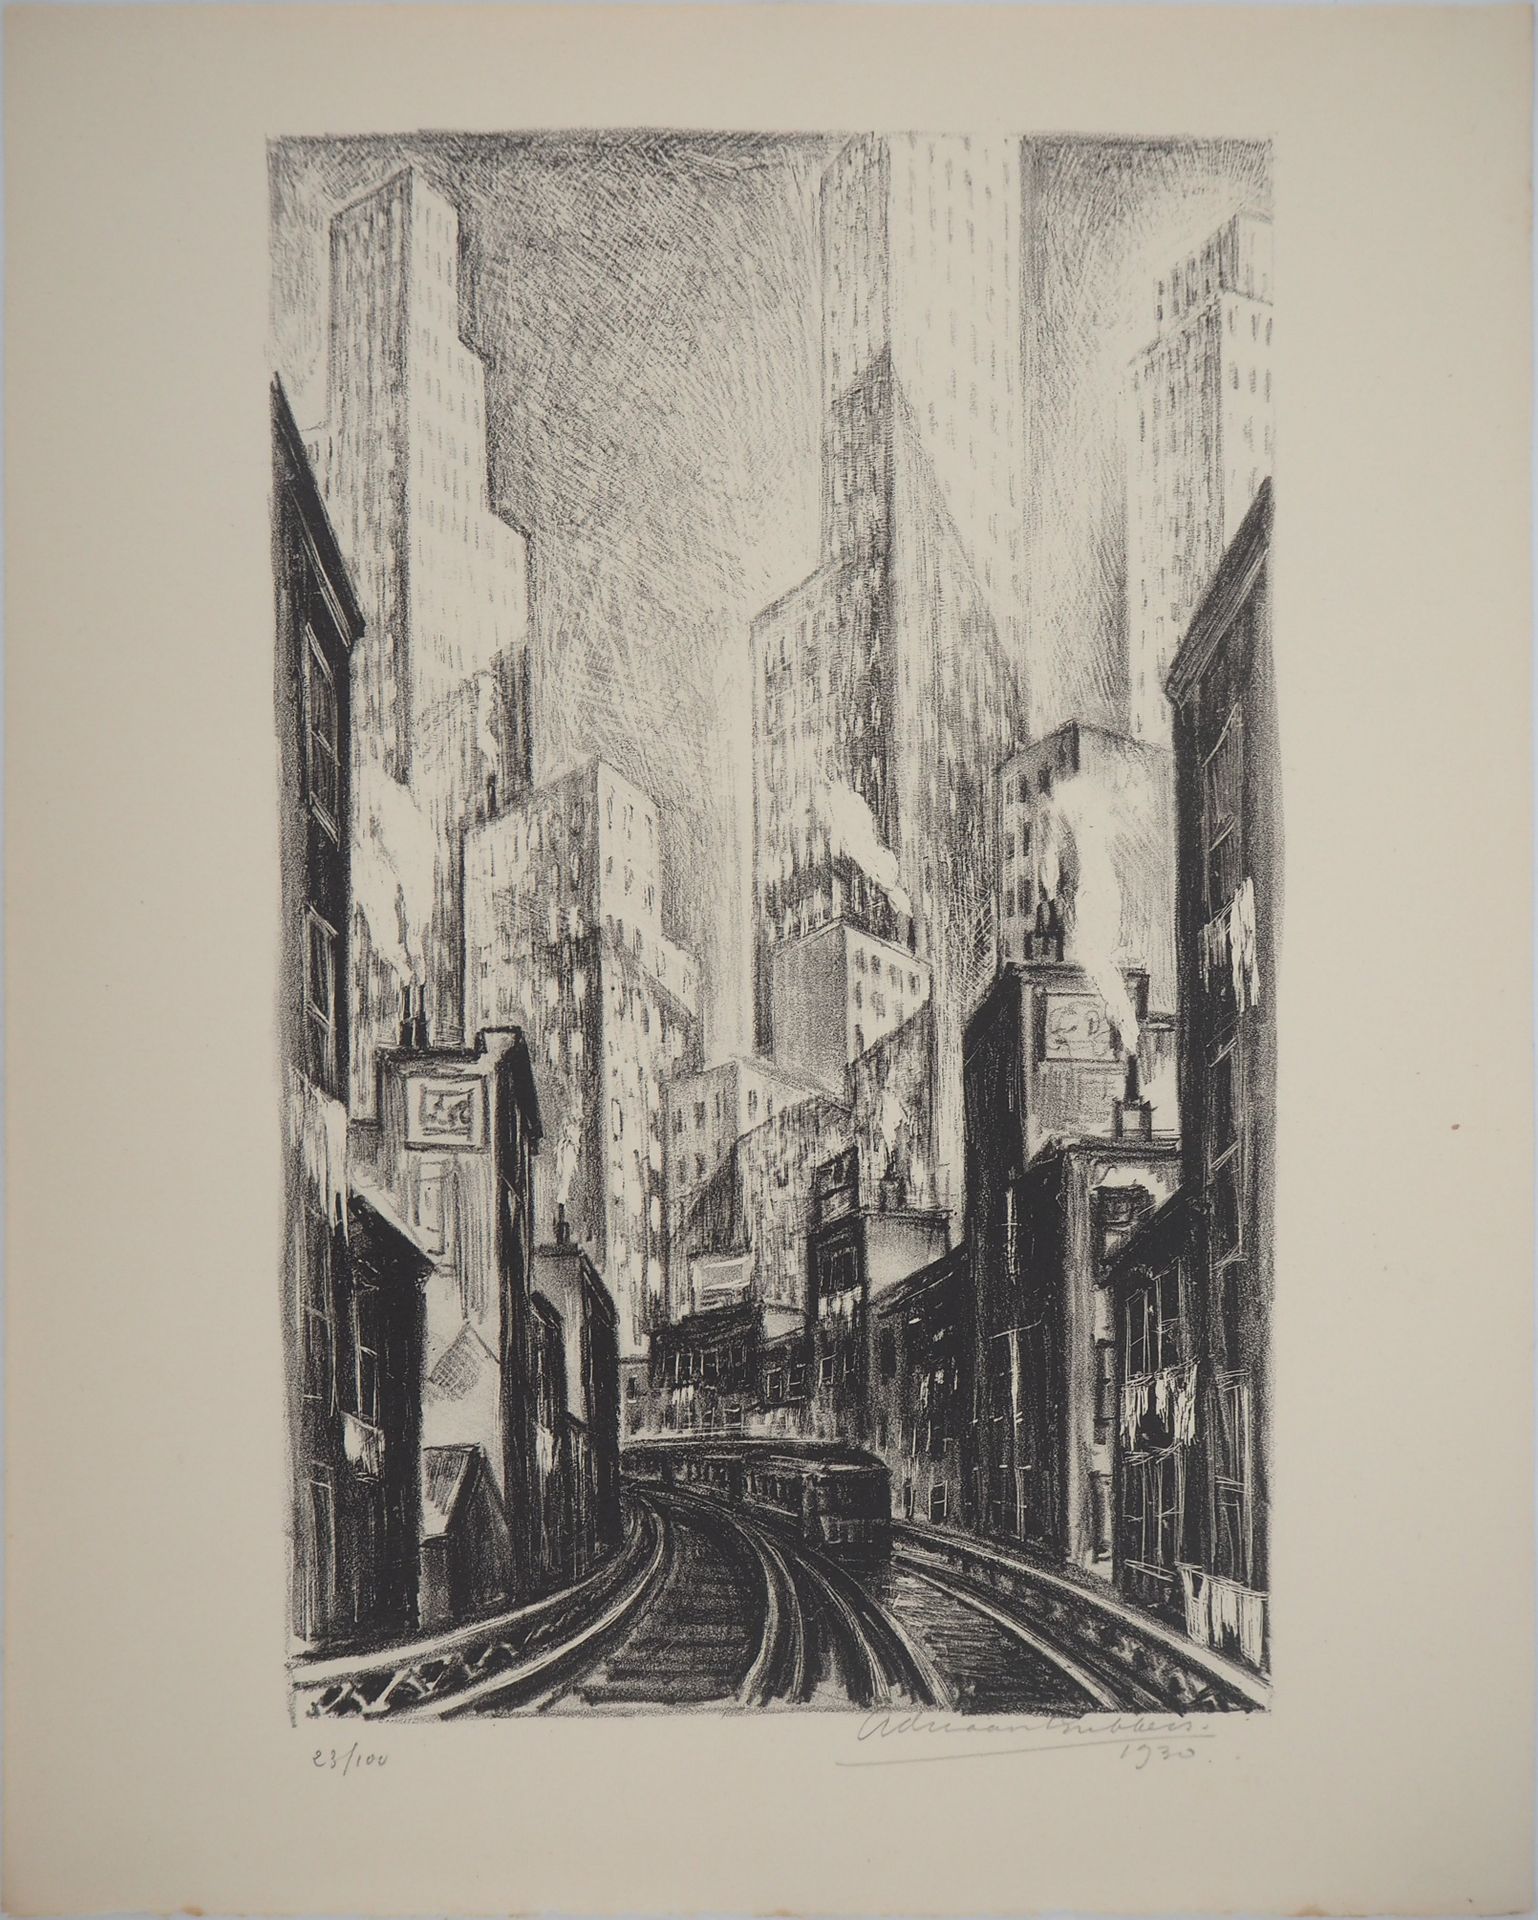 Adriaan Lubbers 阿德里亚恩-吕贝尔斯

纽约市，查塔姆广场的El，1930年

原始石版画

用铅笔签名

有编号/100册

在Rives羊皮&hellip;